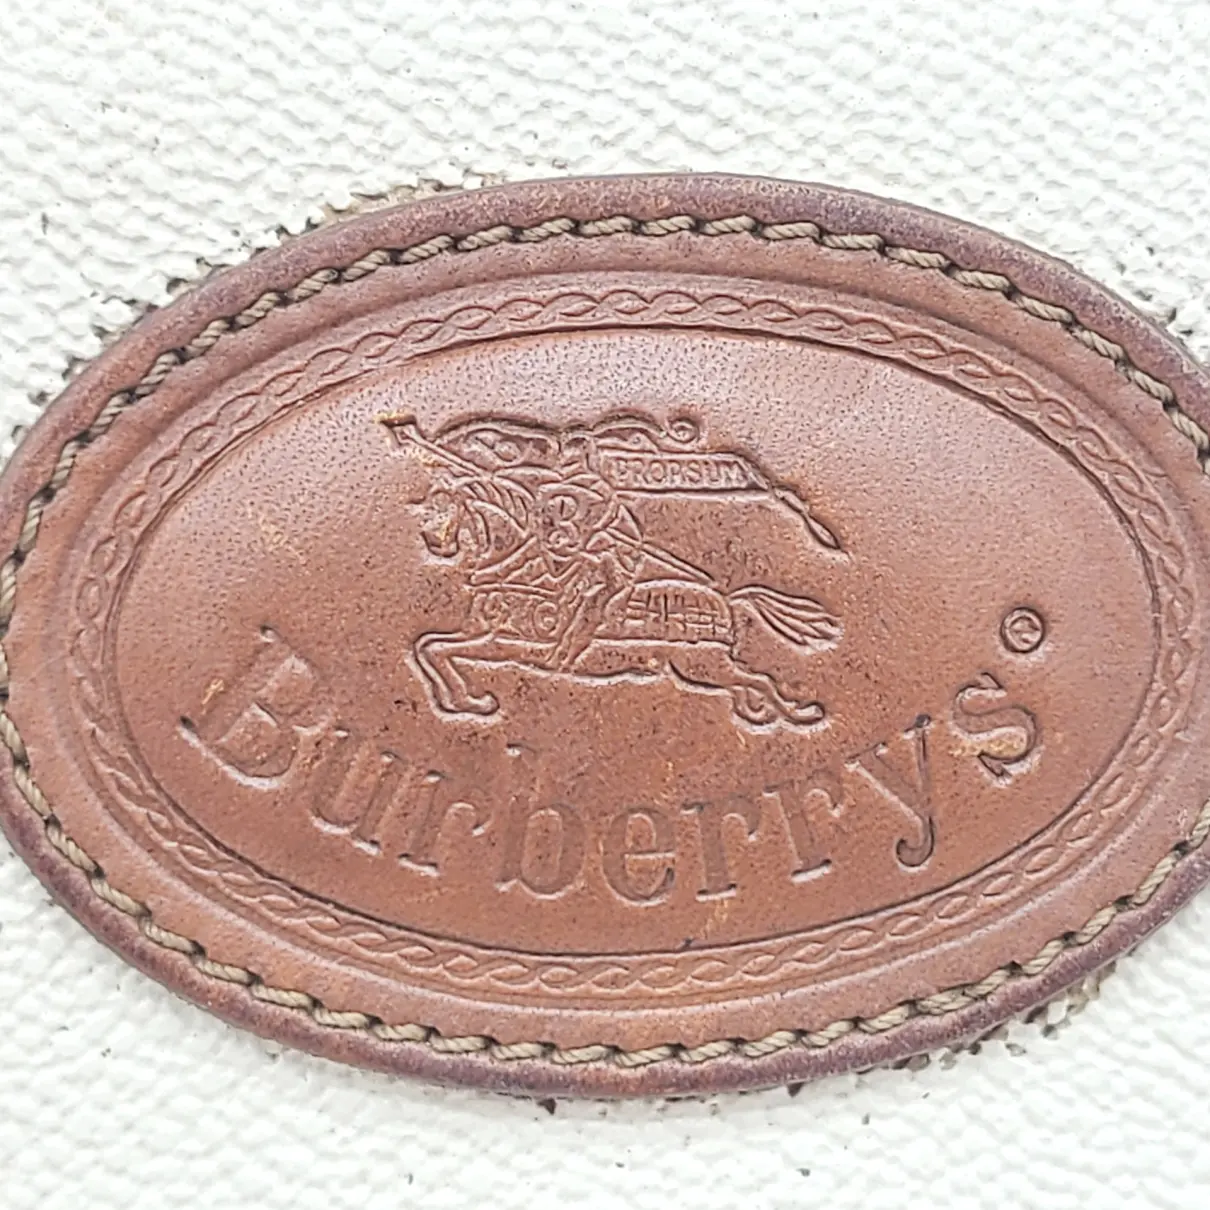 Leather satchel Burberry